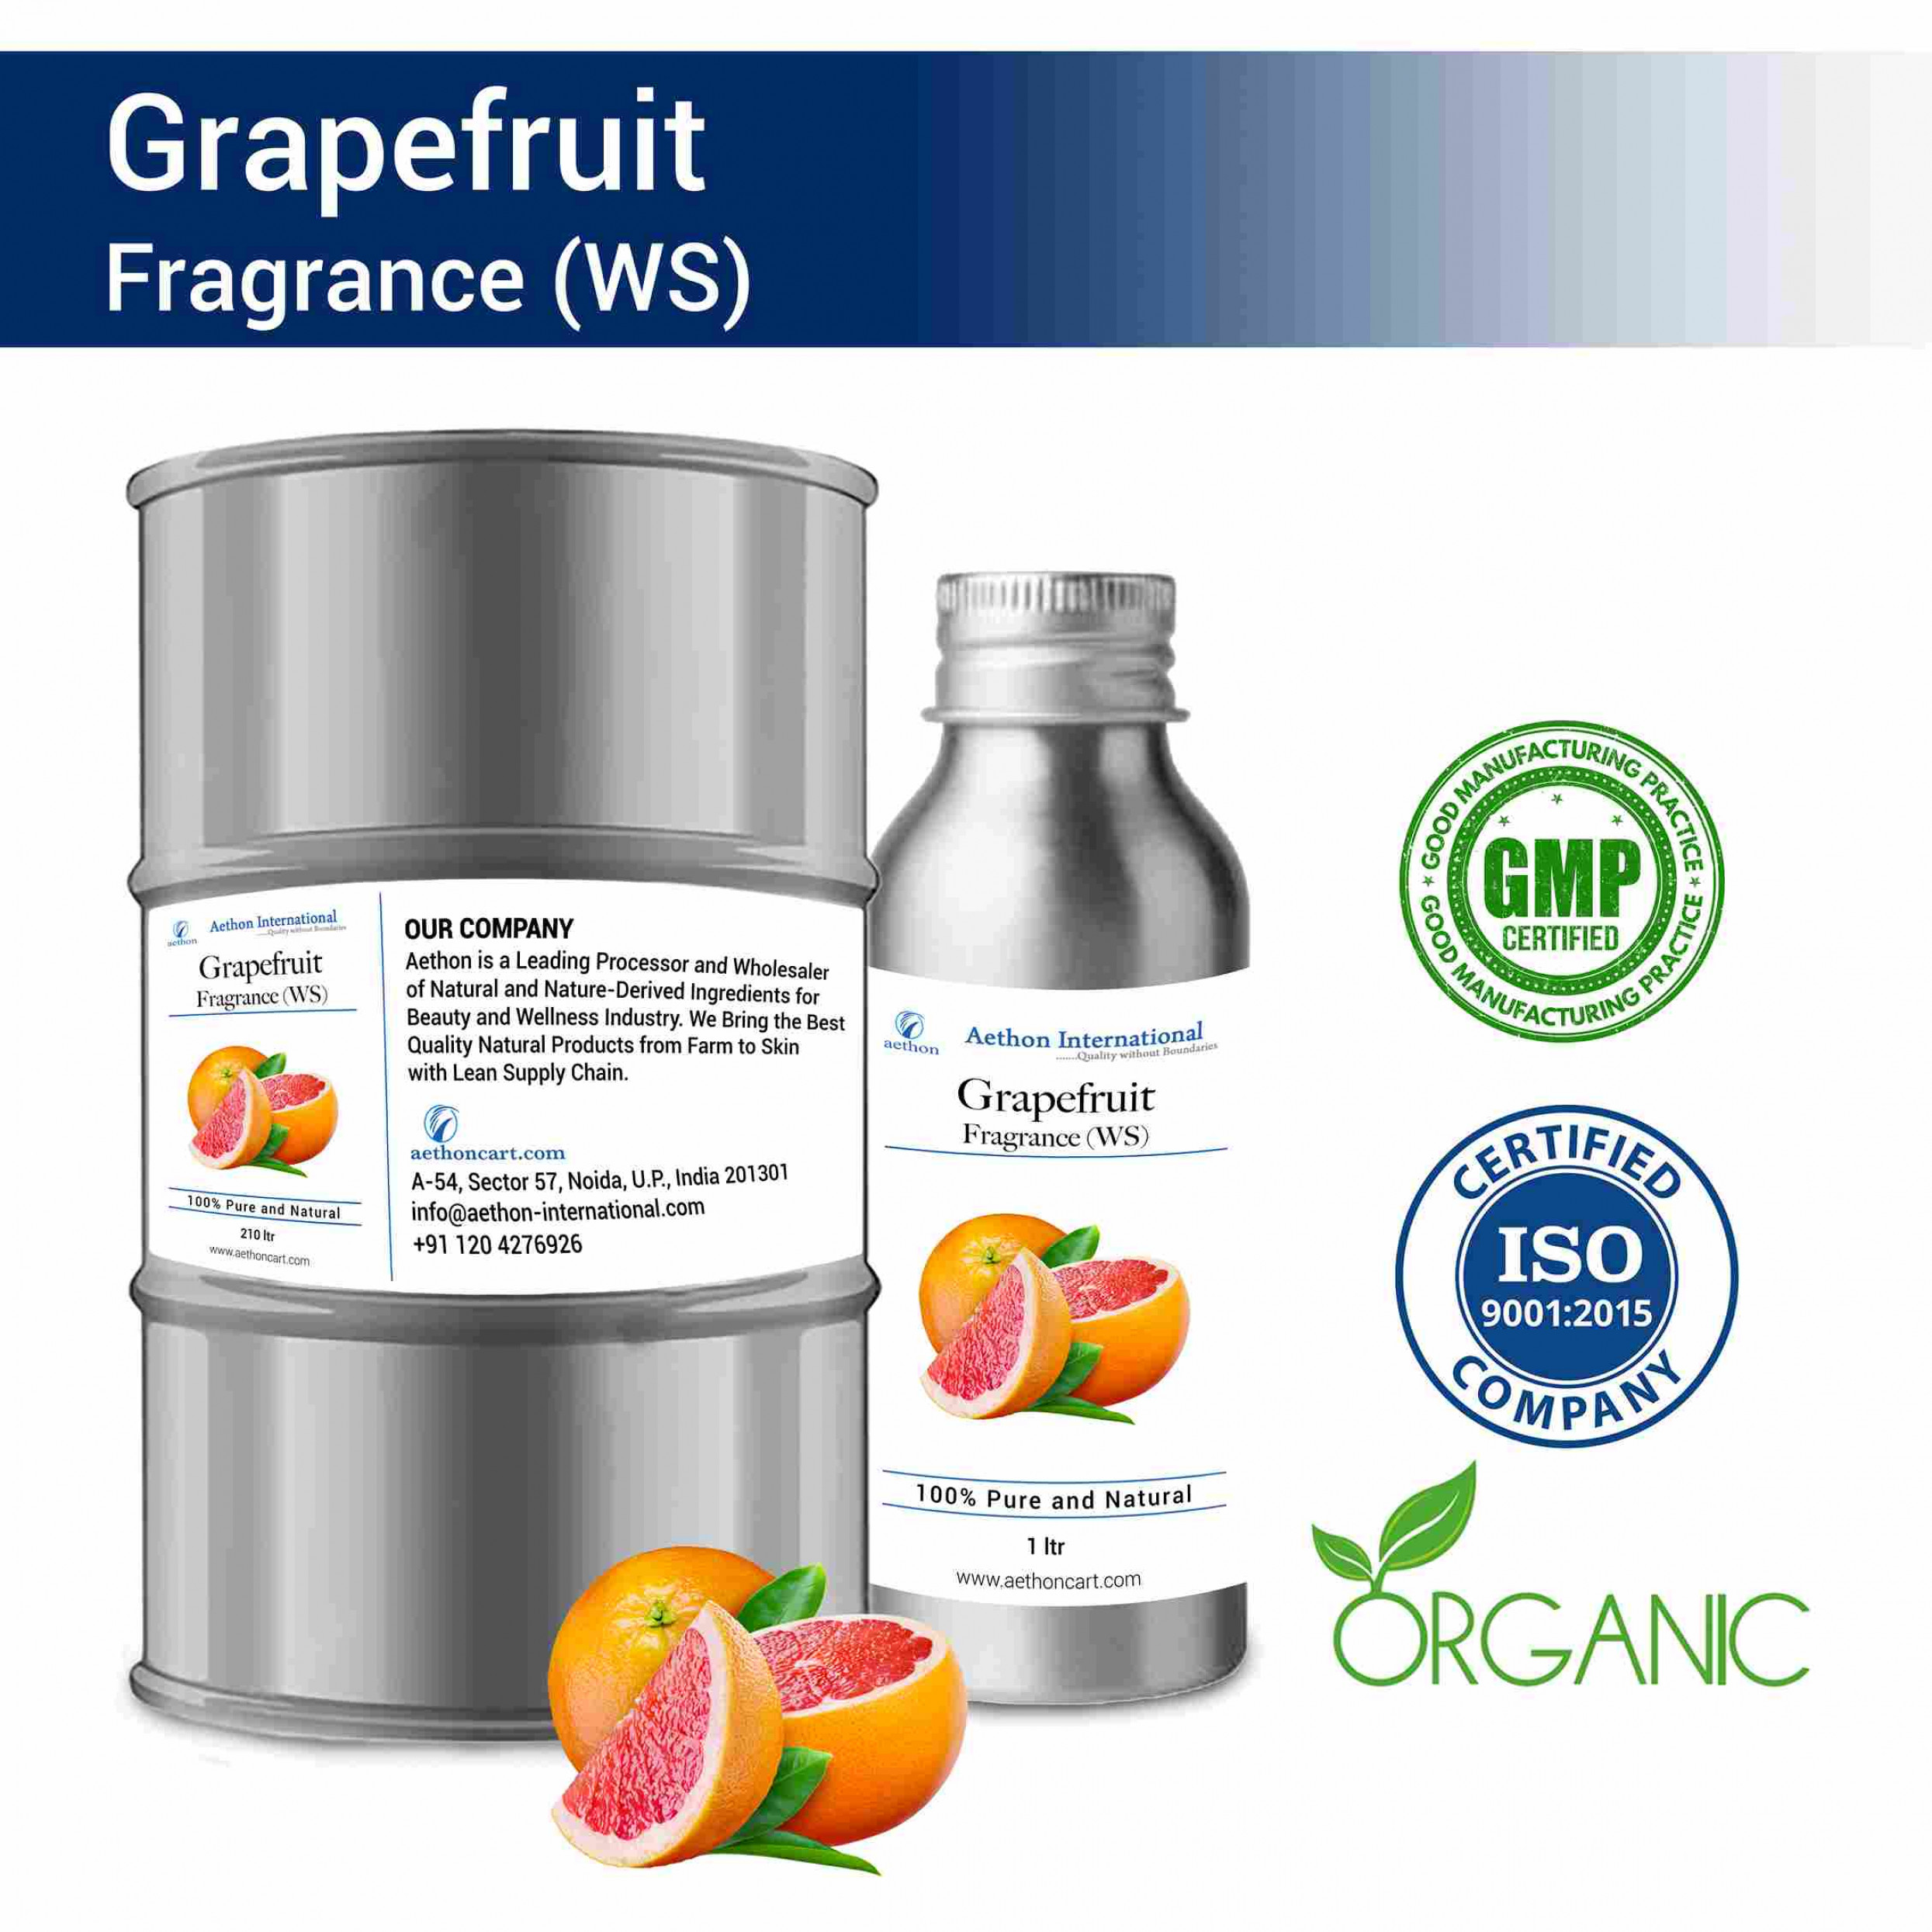 Grapefruit Fragrance (WS)